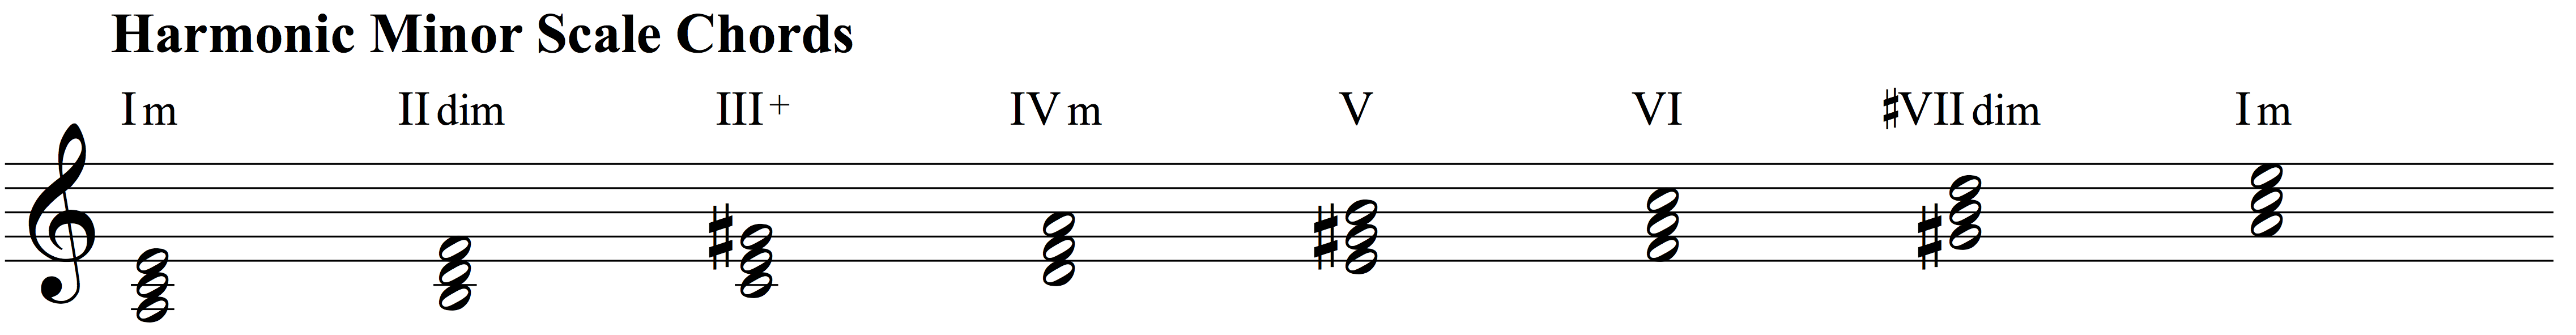 Discovering Minor Chord Progressions: Minor Scale Basics - Musical U